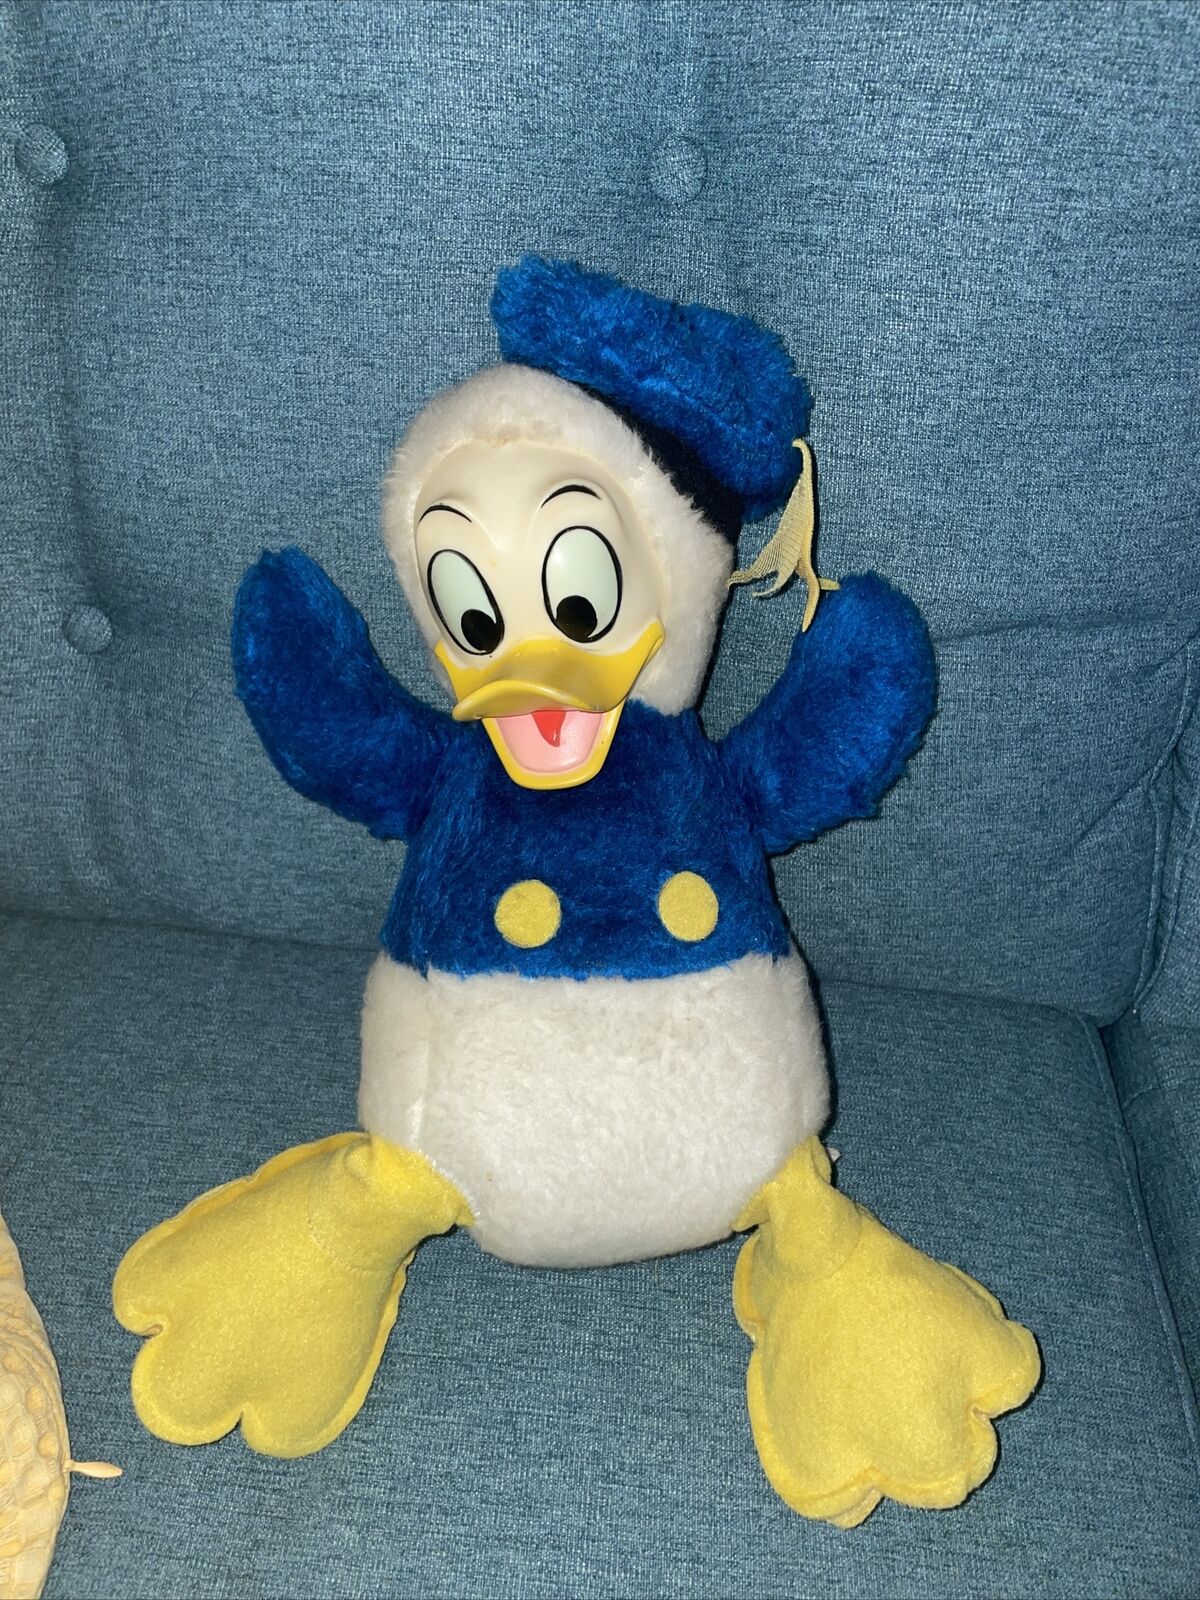 Walt Disney Stuffed Donald Duck Plush Toy Made in California USA 1950s 1960s MCM